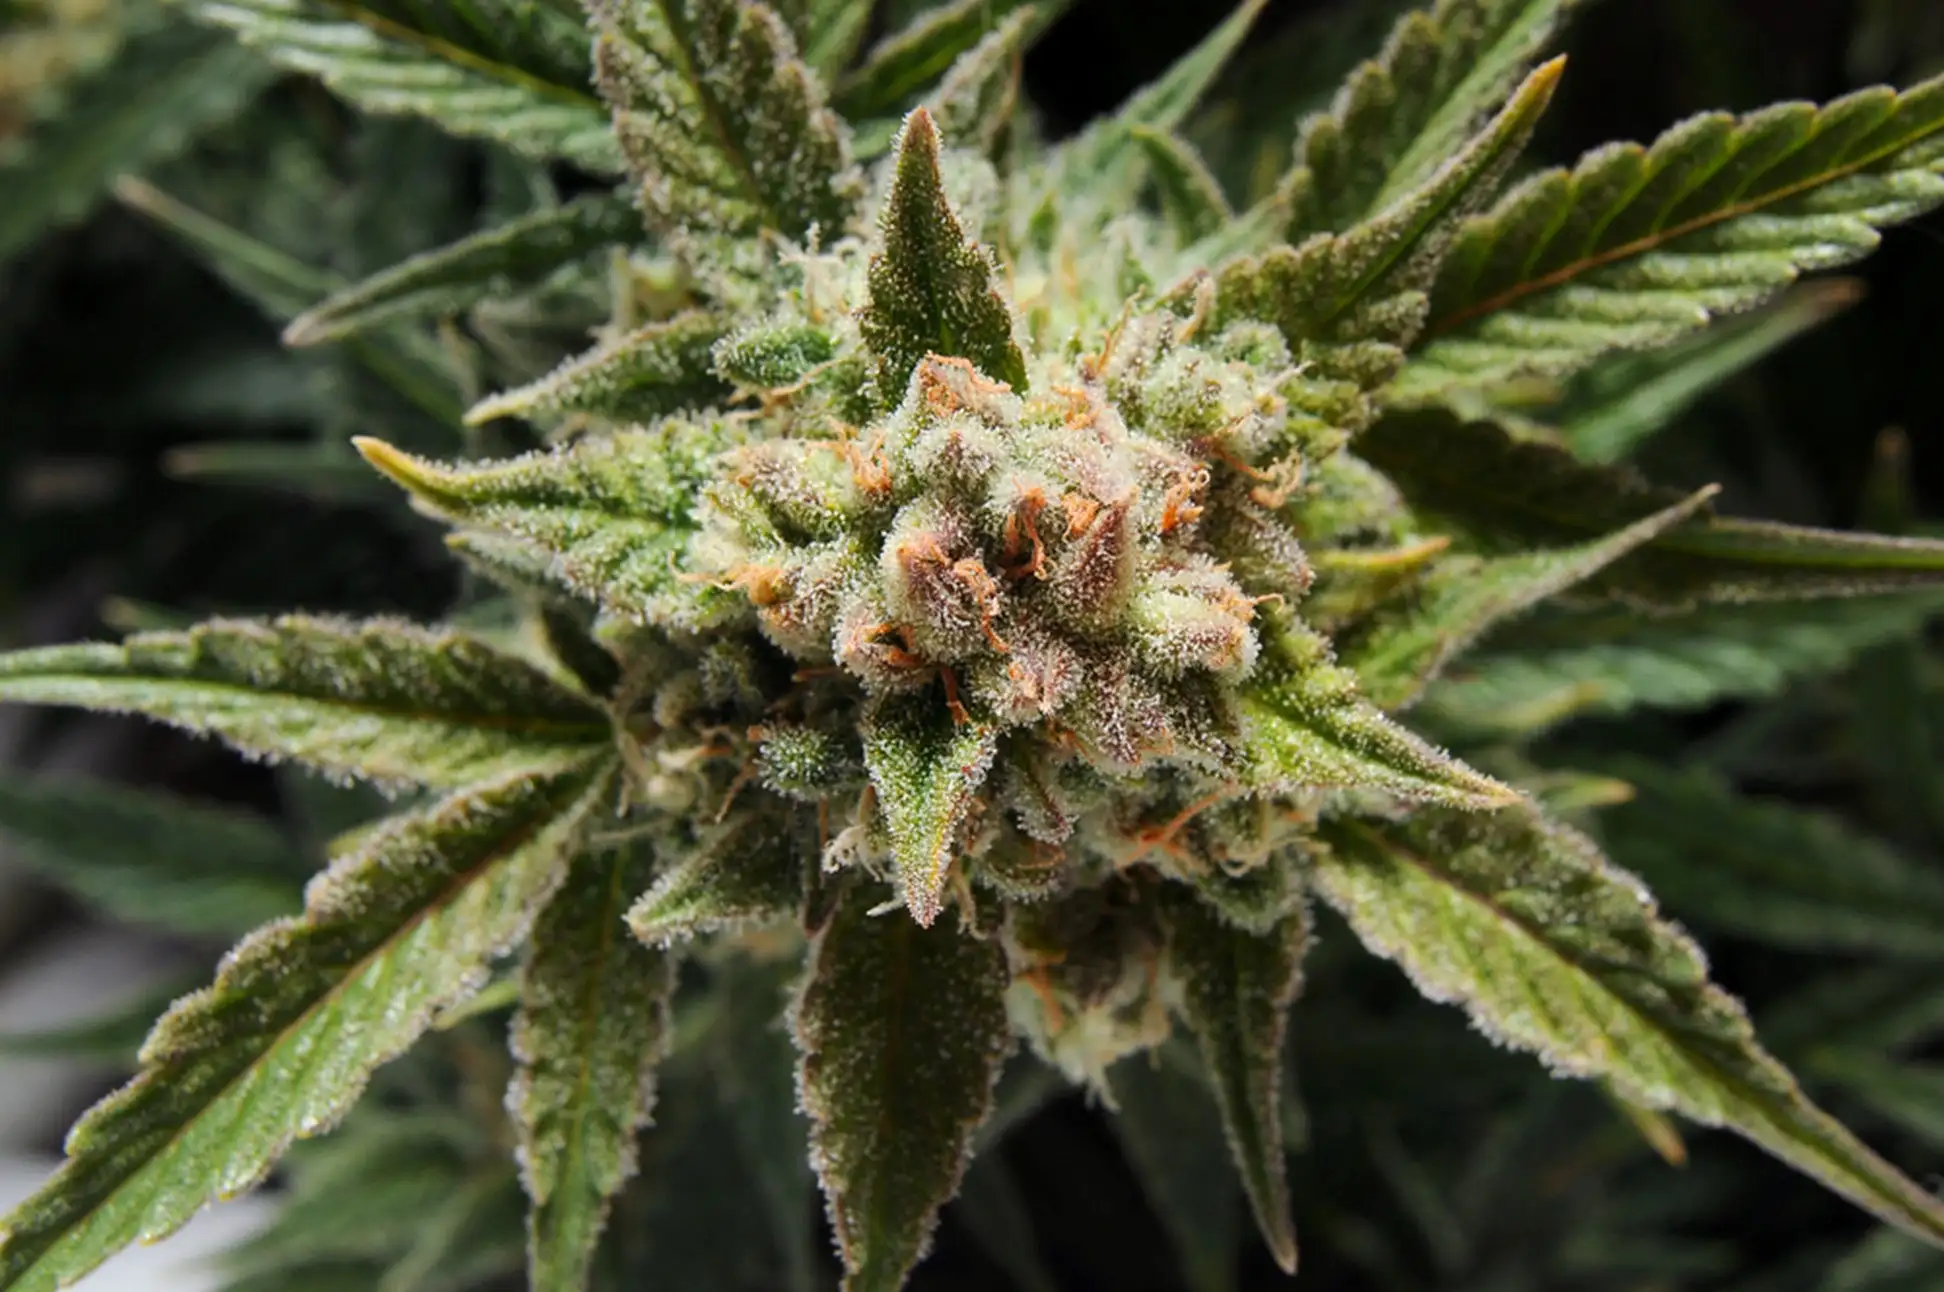 A close up of a marijuana plant